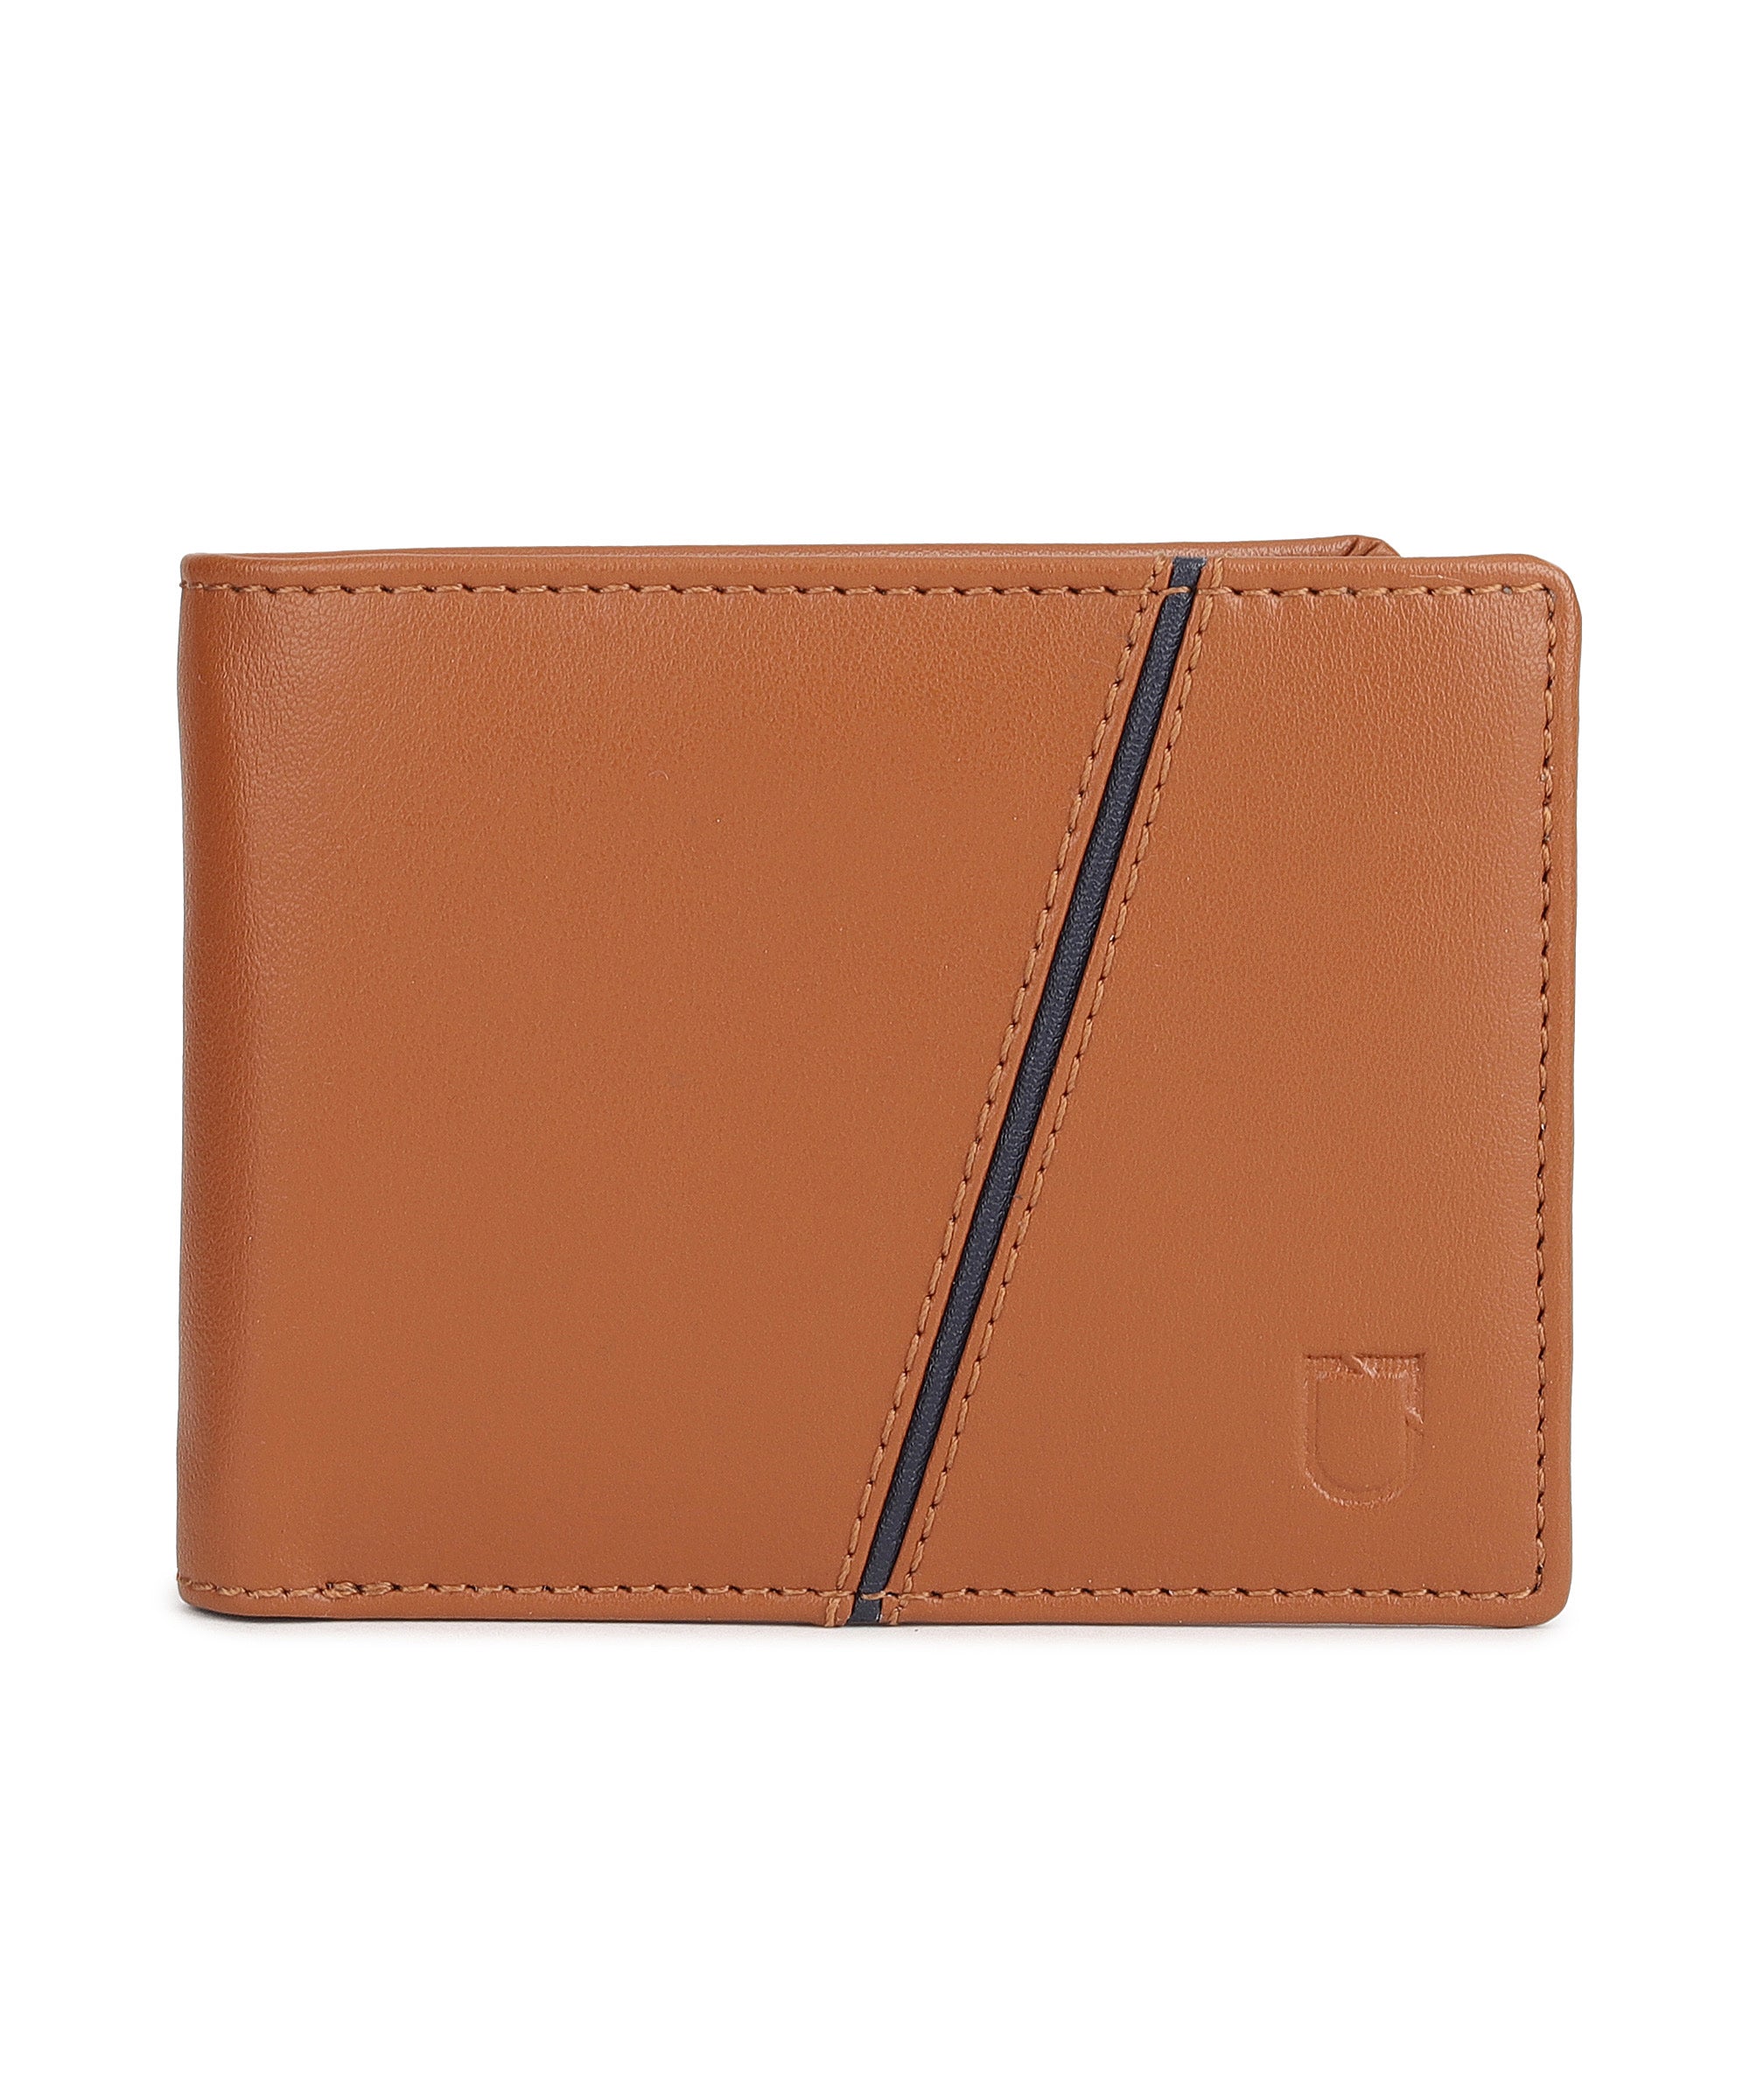 Urbano Fashion Men's Tan Casual, Formal Leather Wallet-3 Card Slots